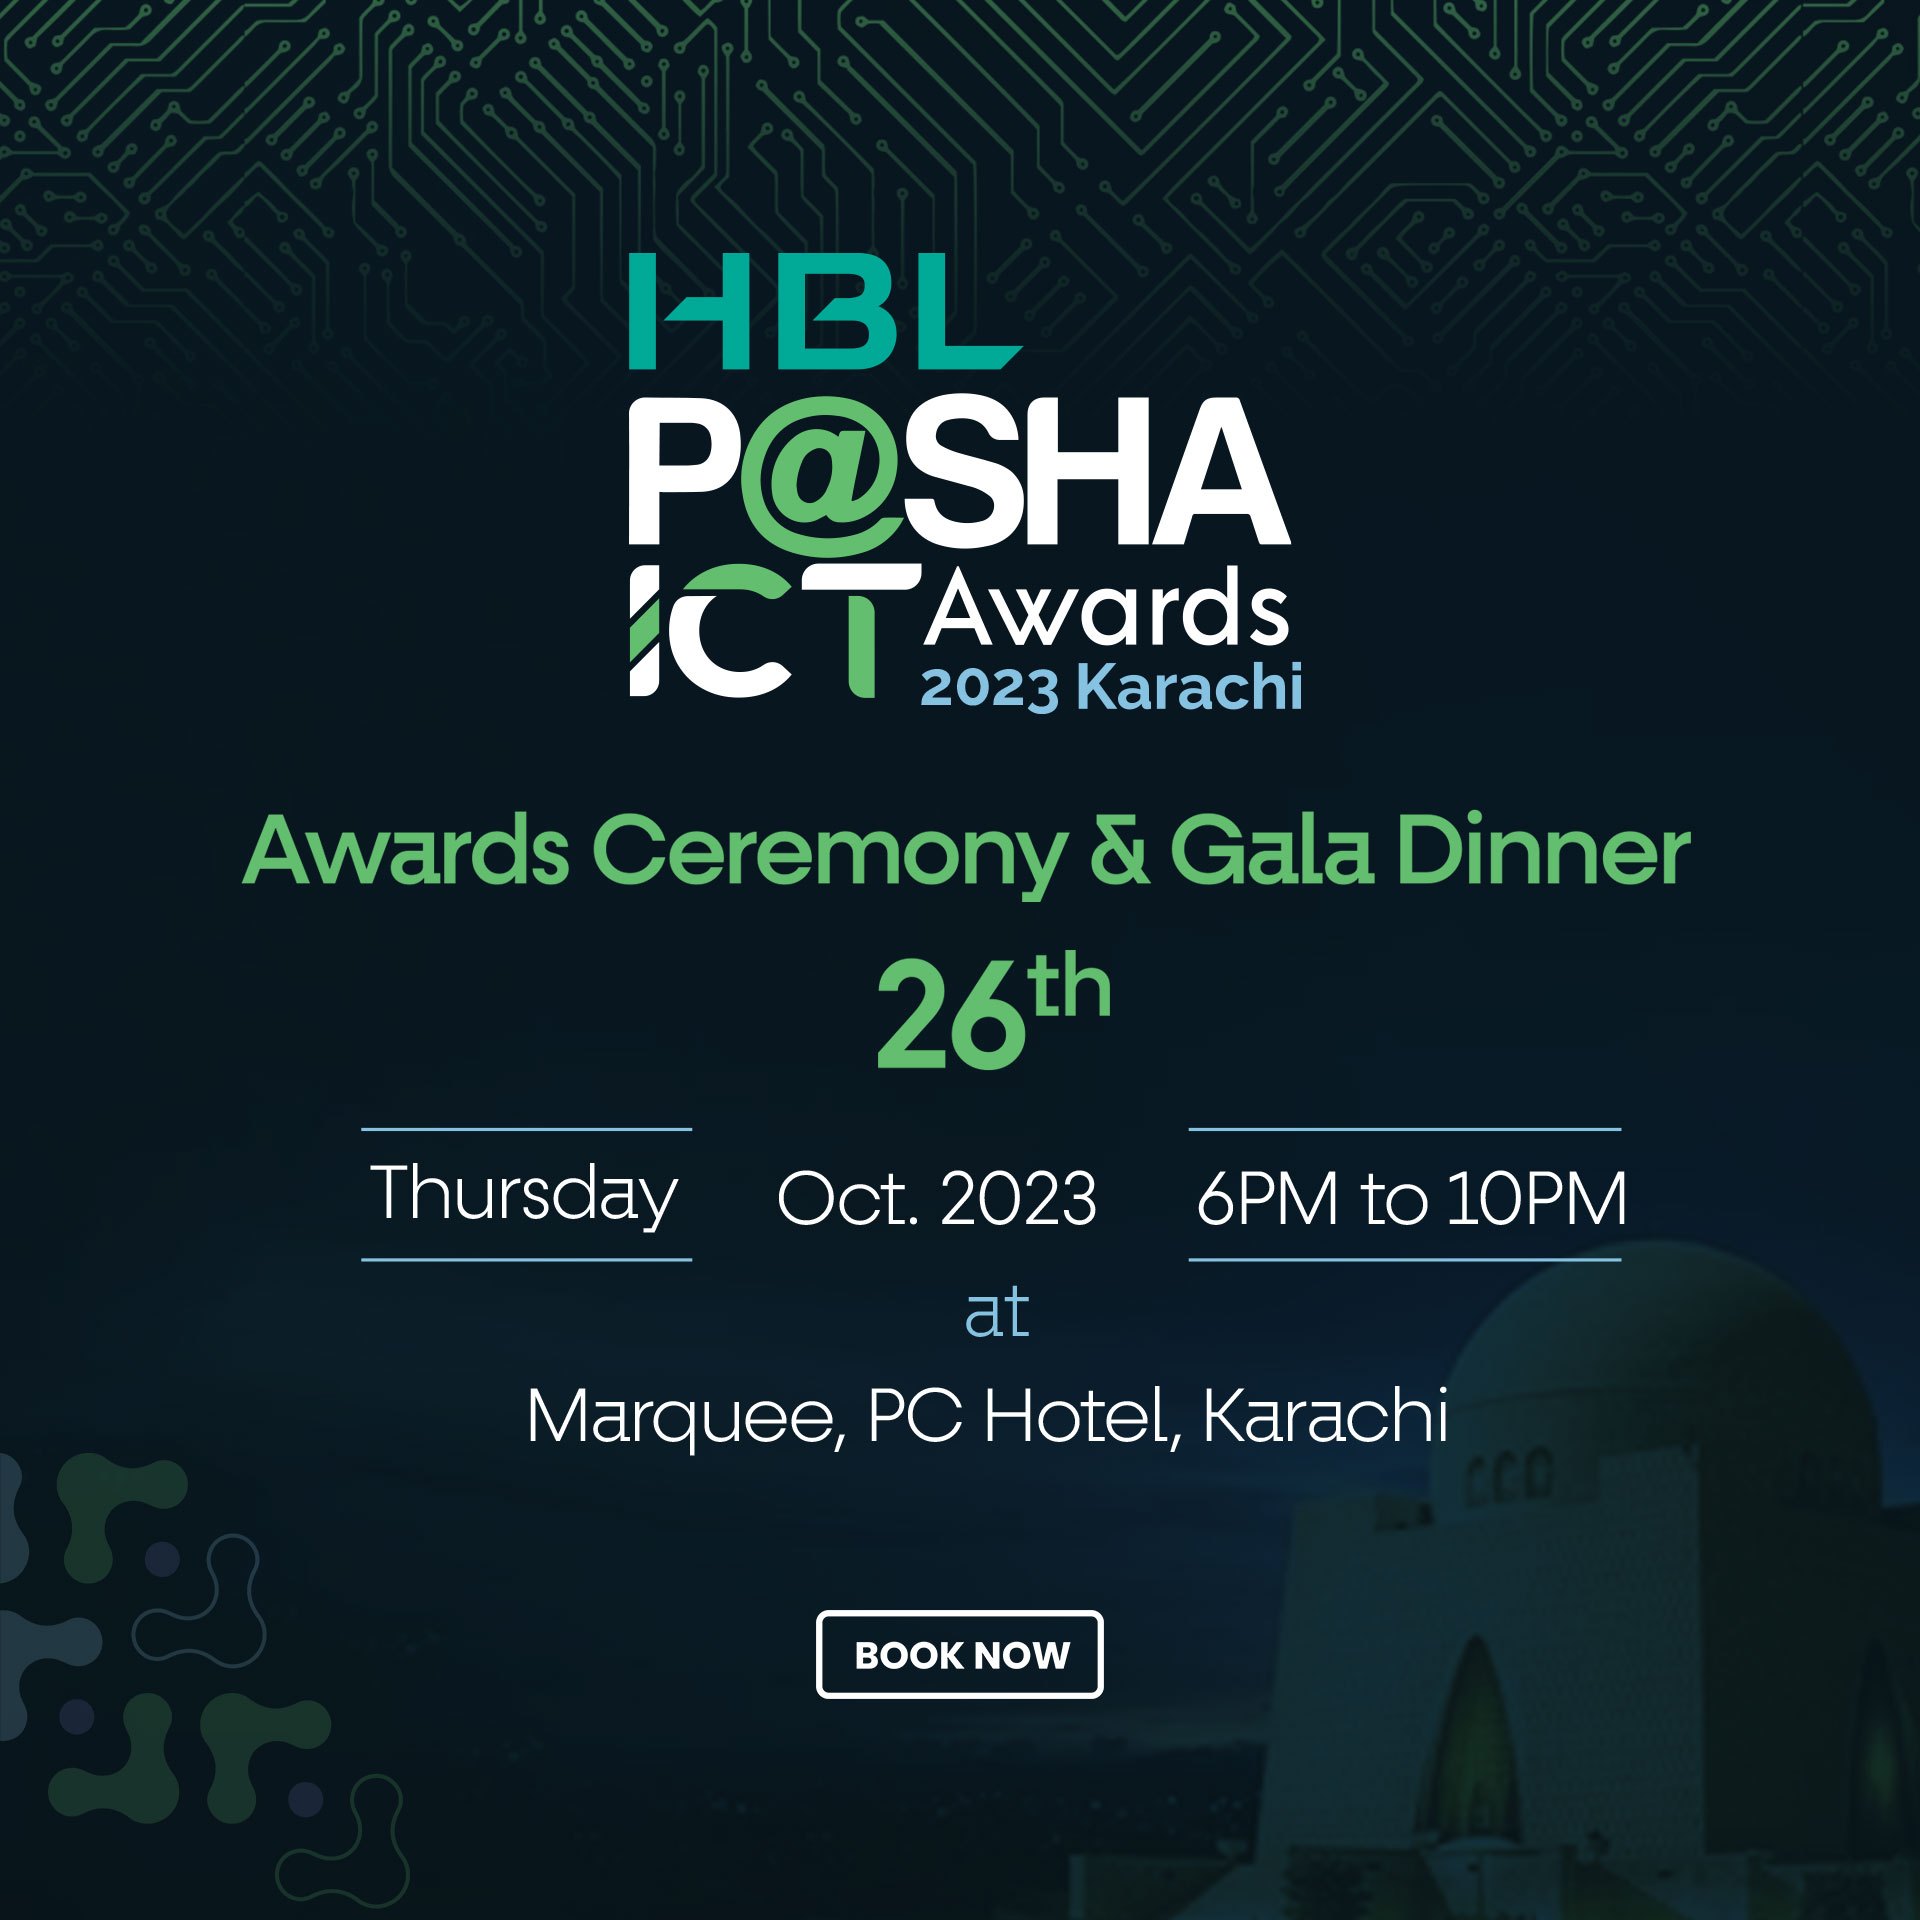 HBL P@SHA ICT Awards 2023 - Awards Night & Gala Dinner